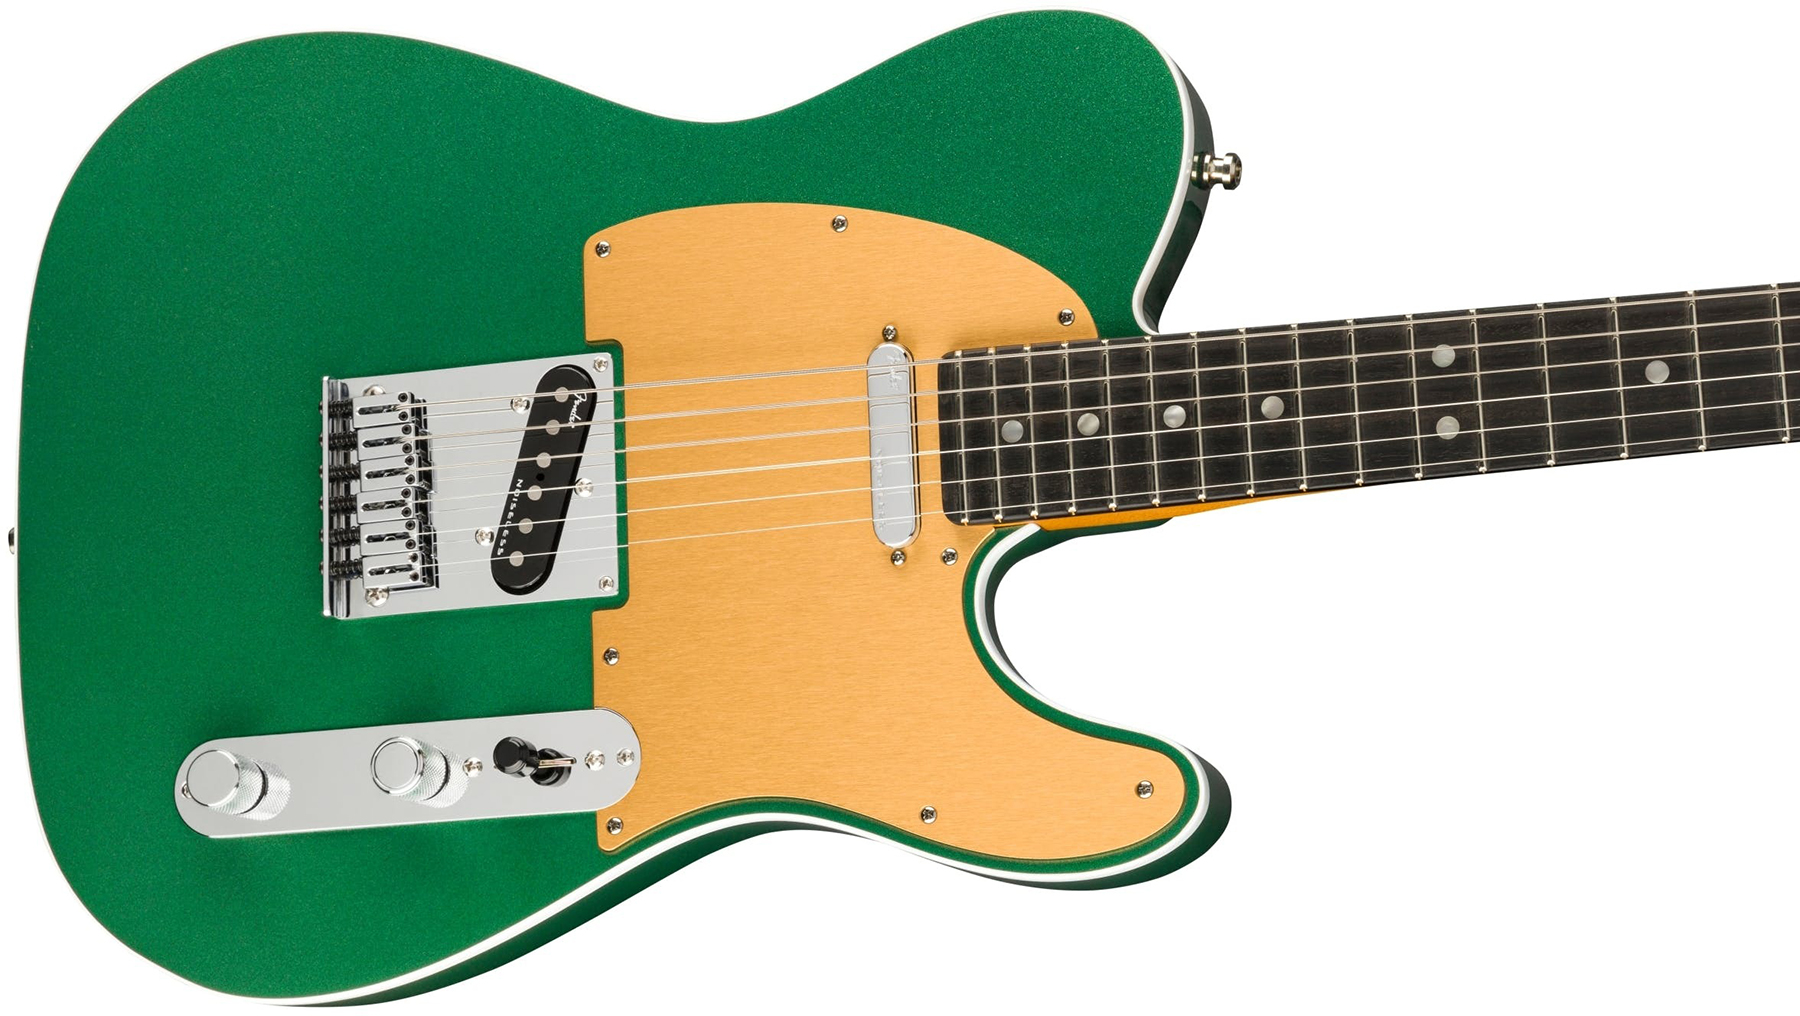 Fender Tele American Ultra Fsr Ltd Usa 2s Ht Eb - Mystic Pine Green - Televorm elektrische gitaar - Variation 2